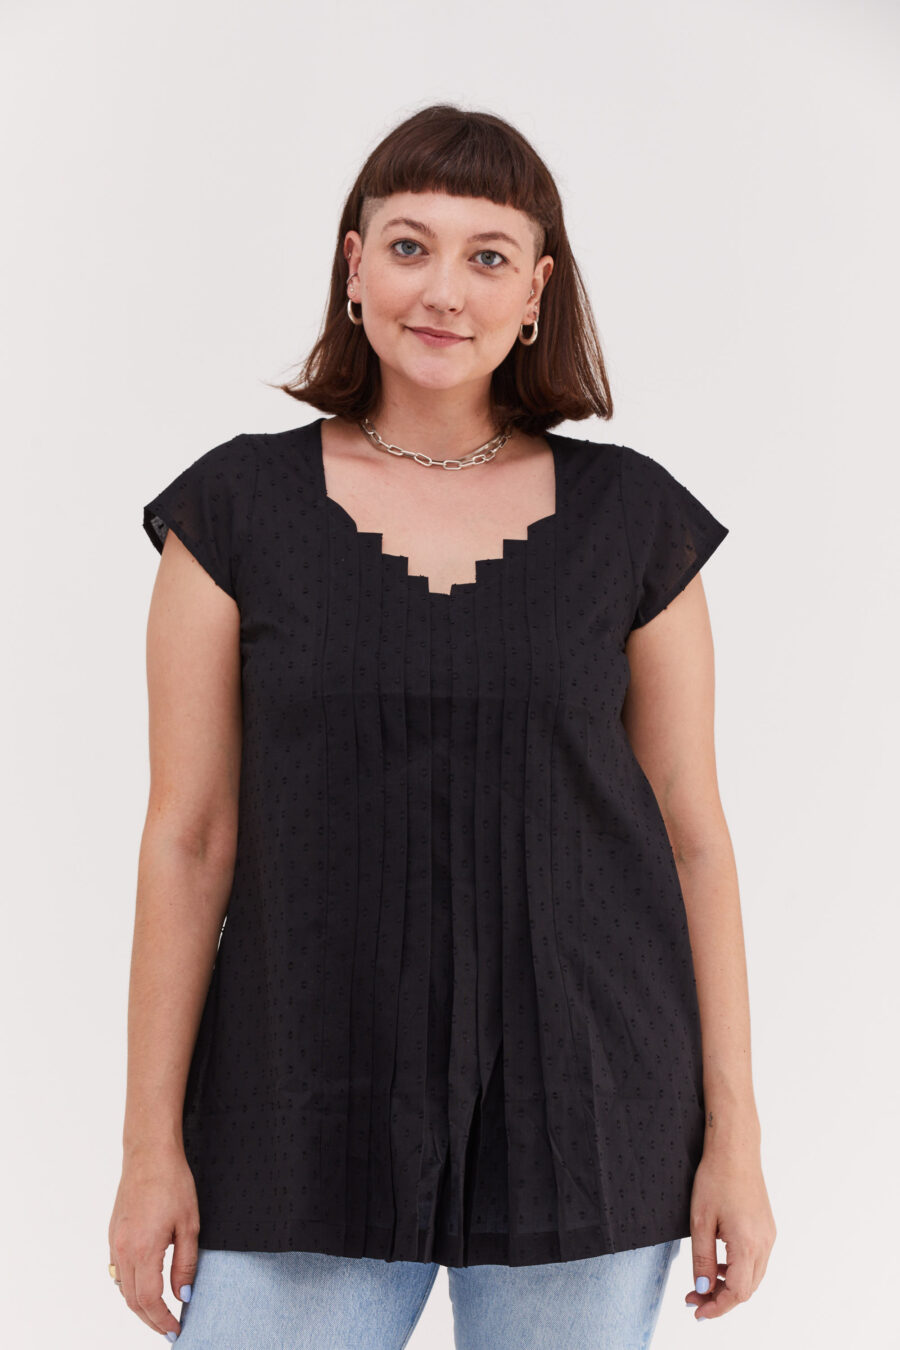 Serena tunic | Uniquely designed black dress – Black tunic with textured black circles